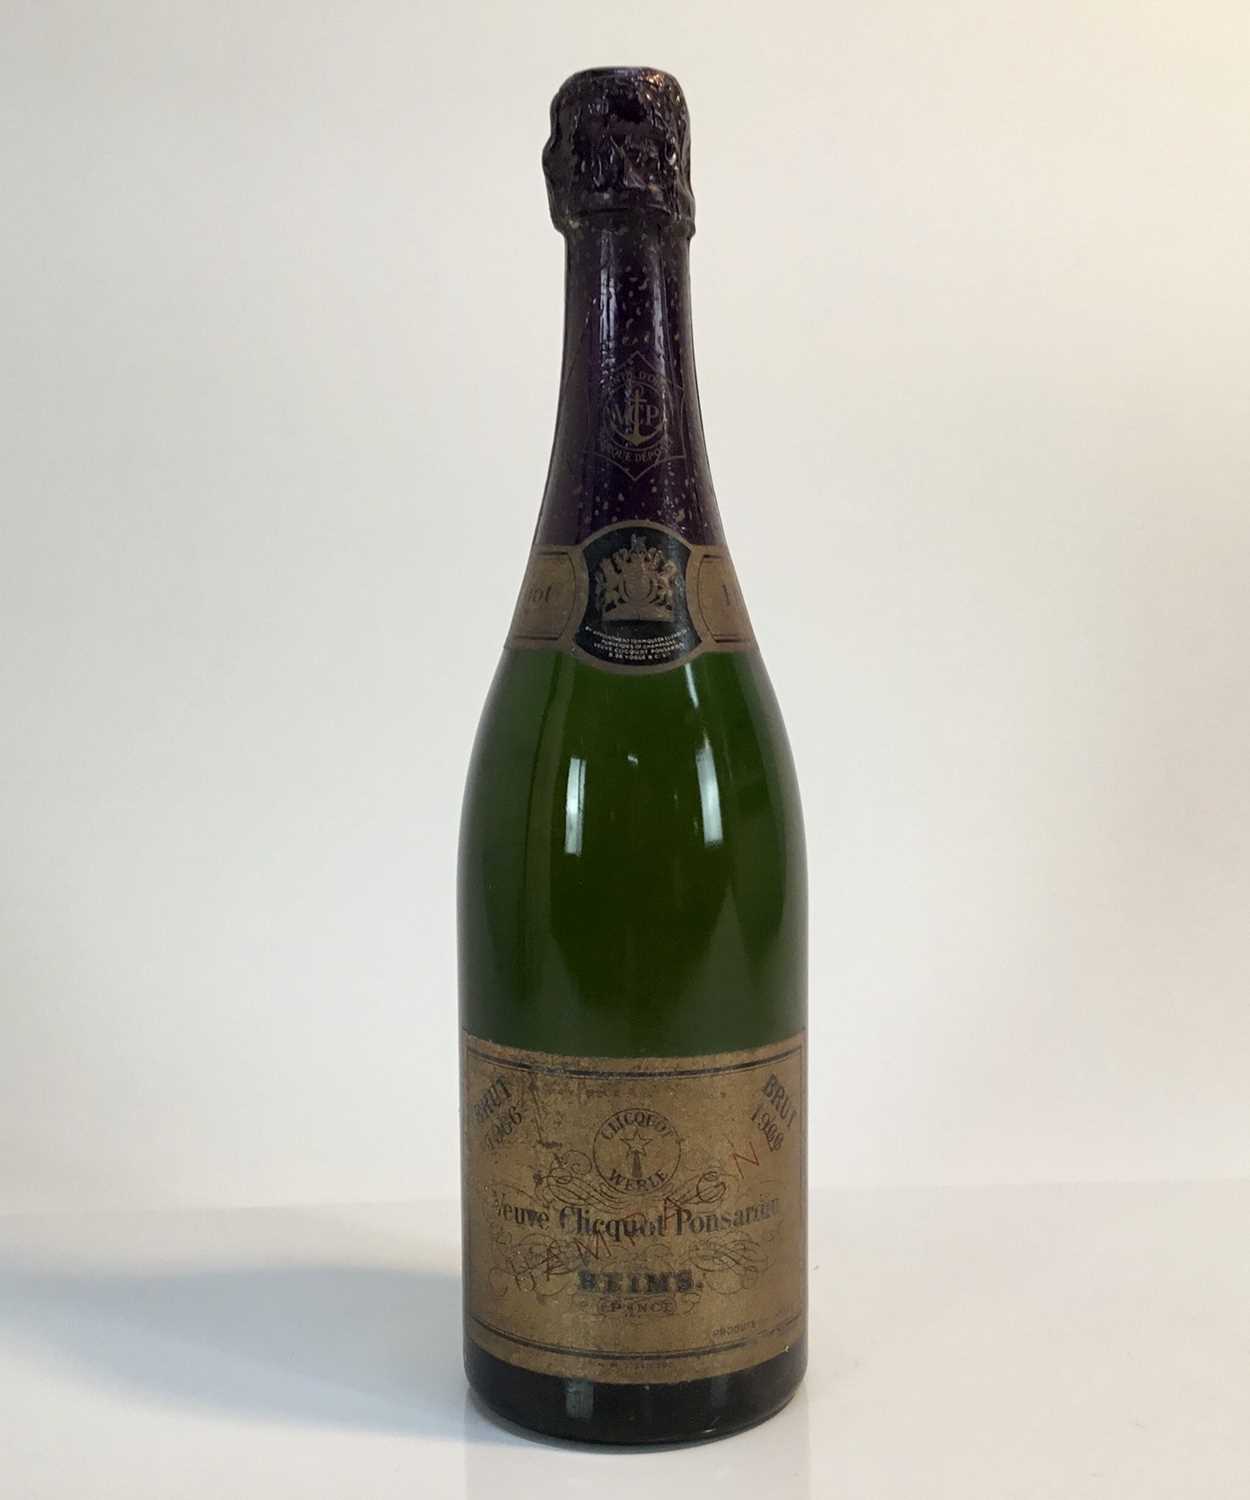 Lot 5 - Champagne - one bottle, Veuve Clicquot Ponsardin 1966